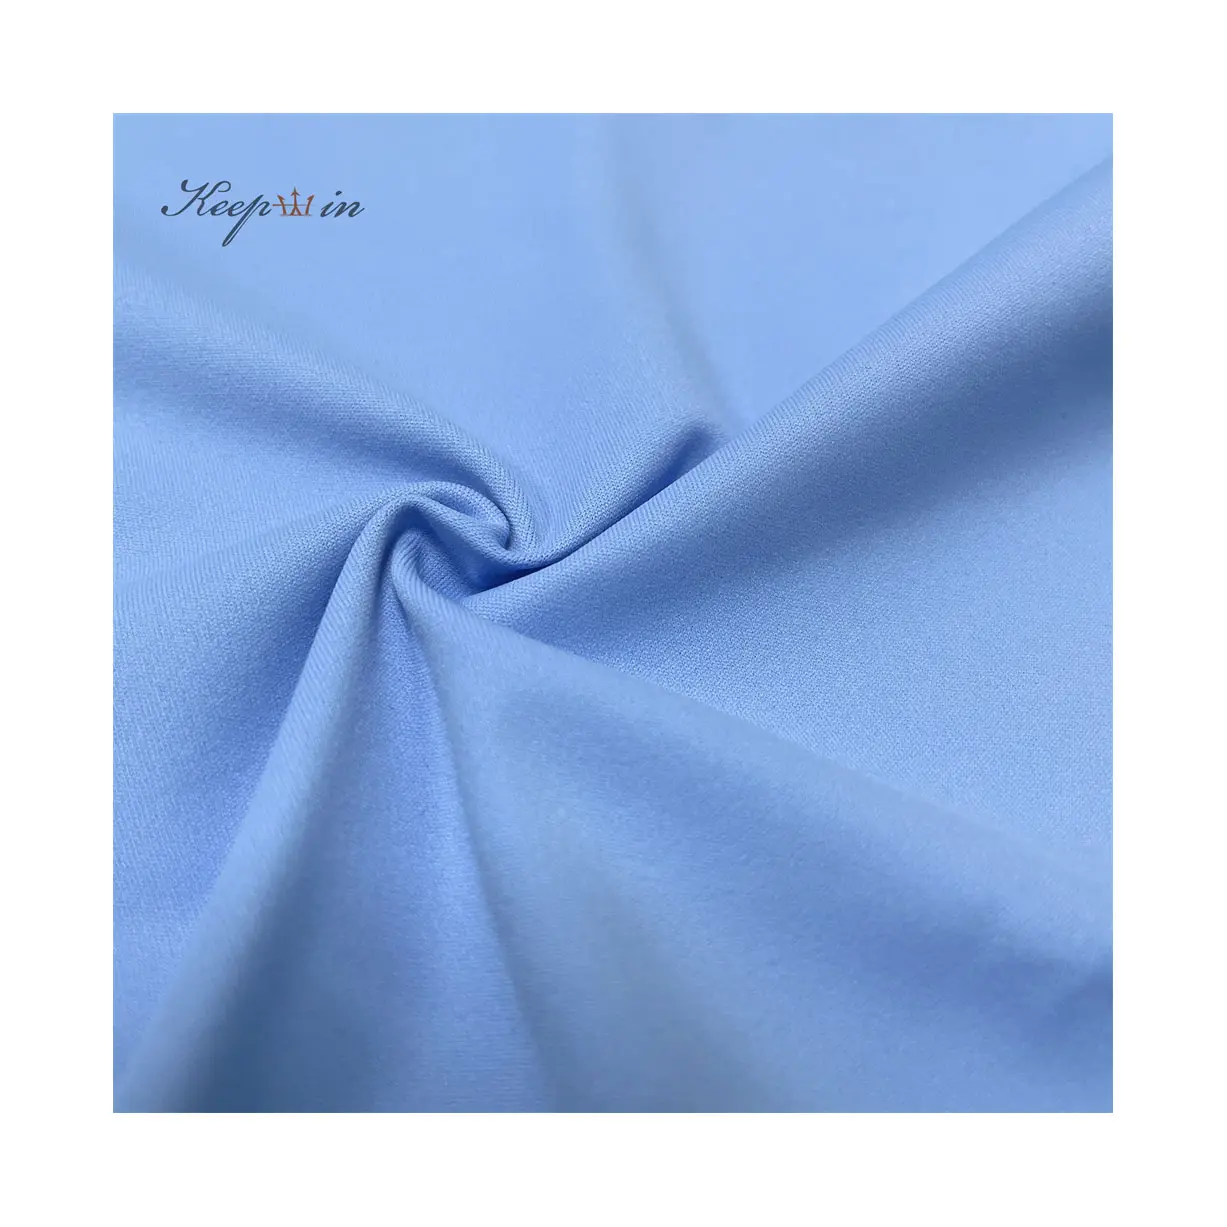 Keepwin High Stretch Fabric 160gsm Nylon Spandex Interlock Like A Cloud Yoga Top Fabric Dry Fit Soft Feeling